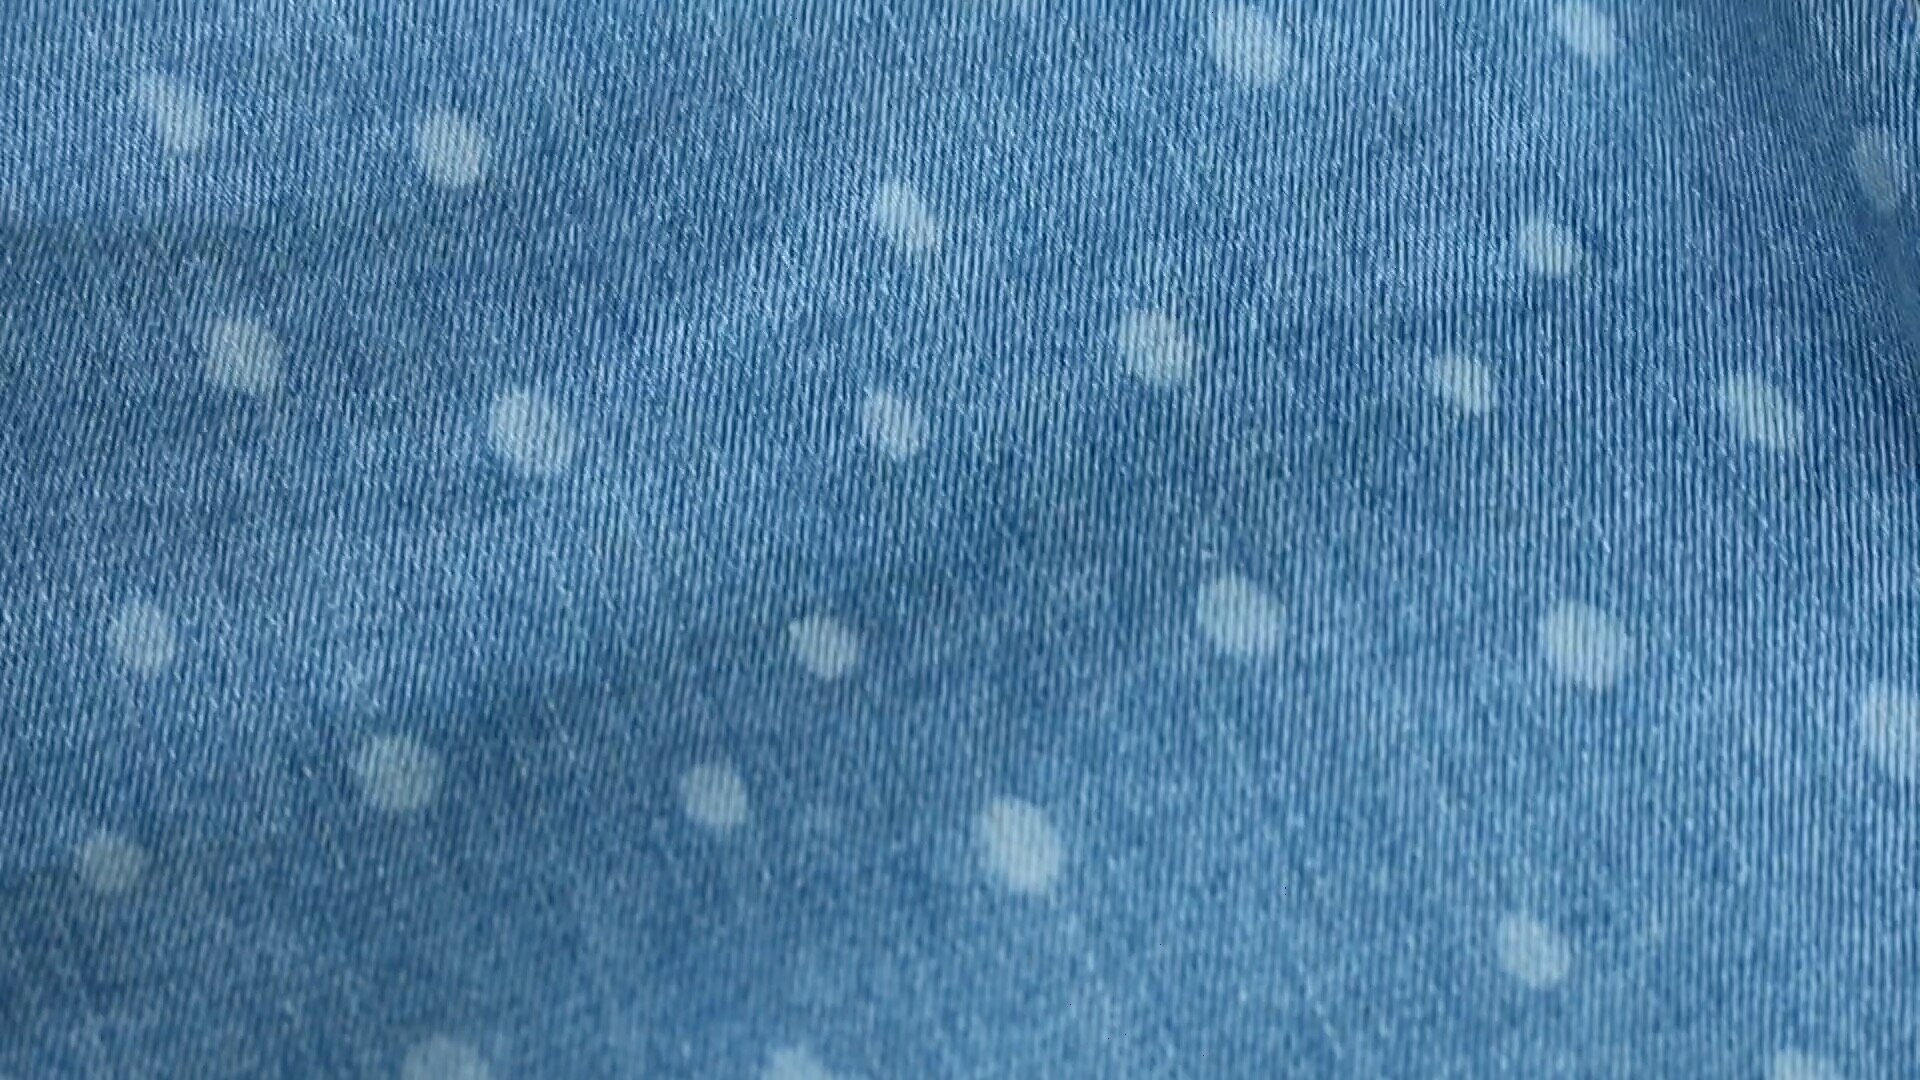 target polka dot jeans fabric.jpg